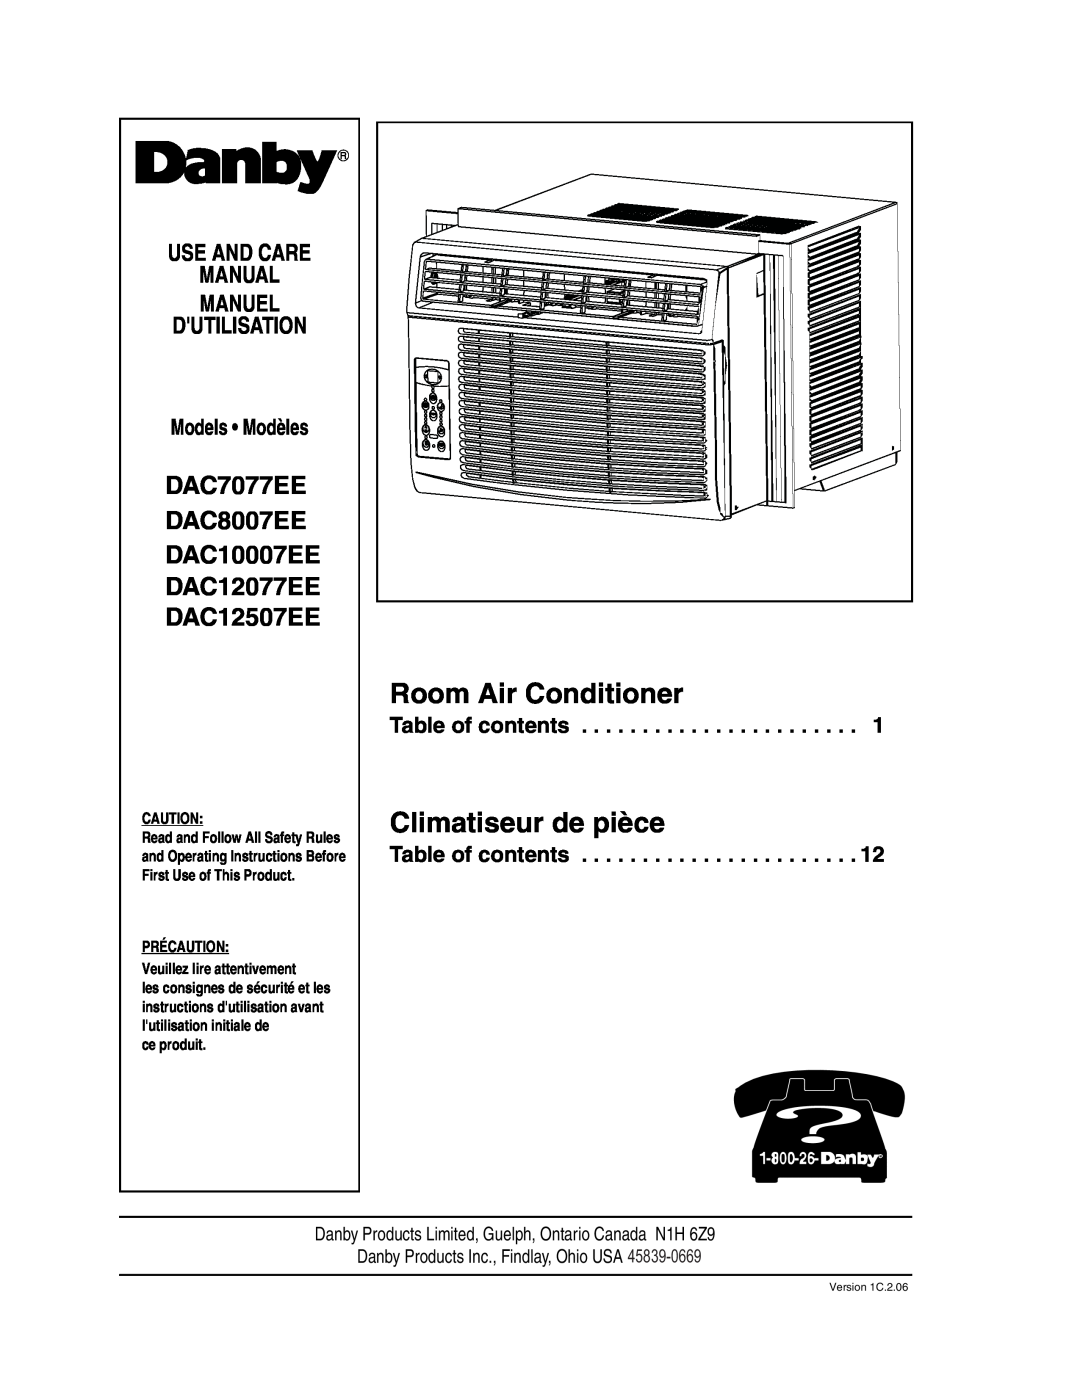 Danby DAC12507EE manuel dutilisation DAC7077EE DAC8007EE DAC10007EE DAC12077EE, Models Modèles, Room Air Conditioner 